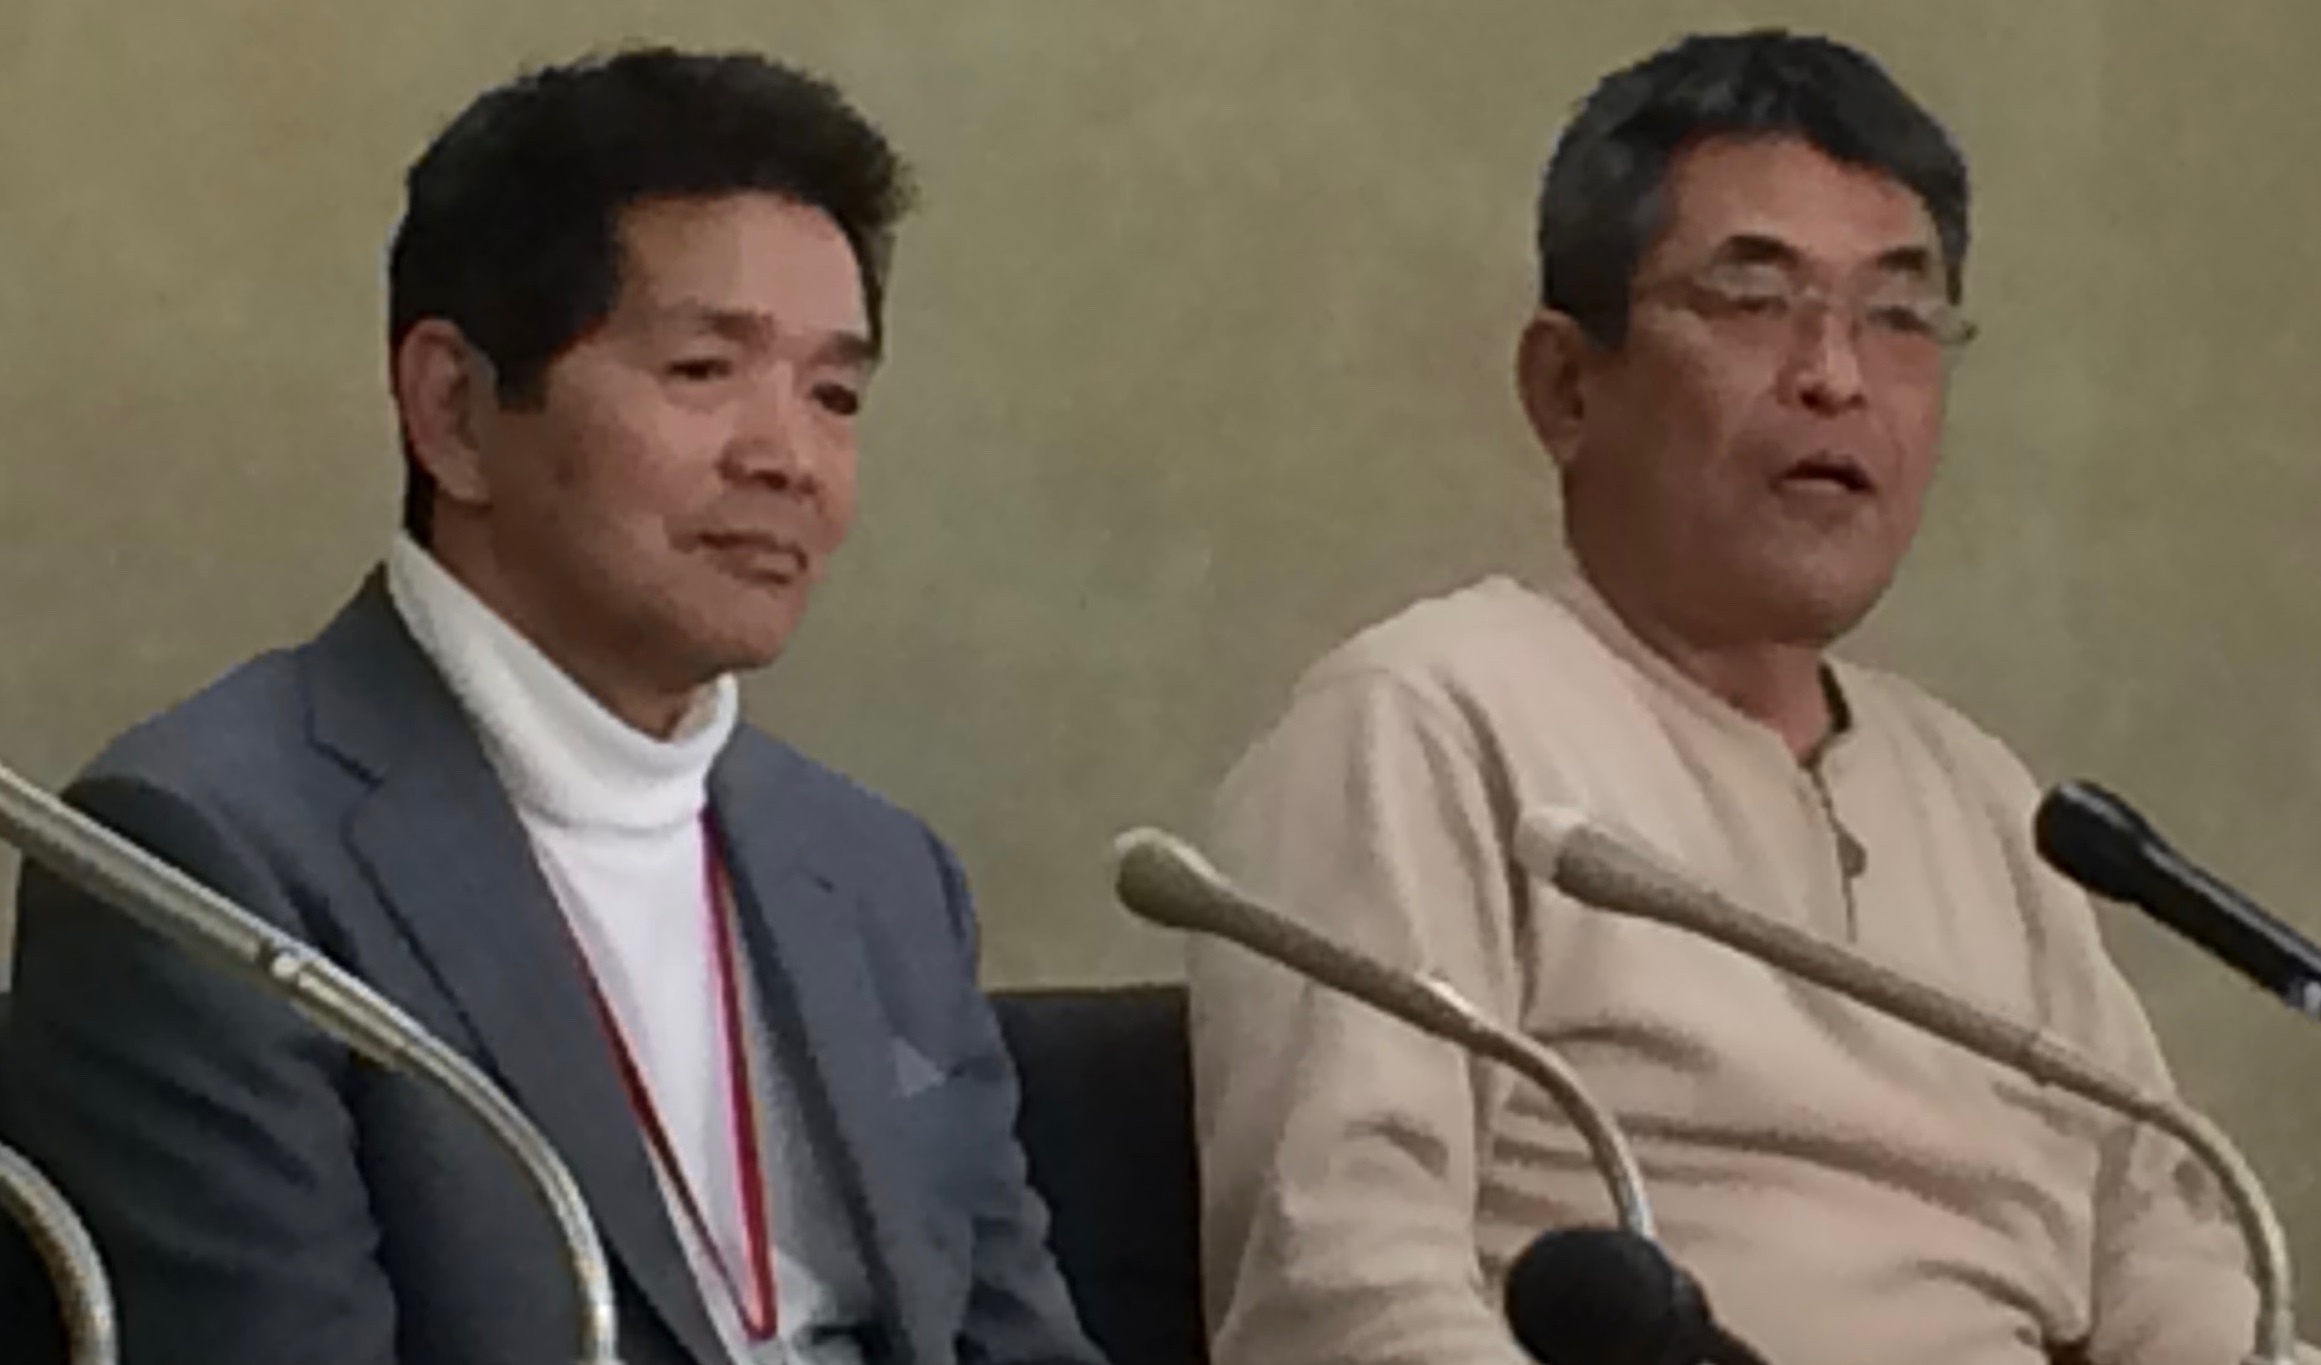 Cancer sufferers Kenji Takayama (left) and Yasuhiro Tanaka address reporters at a news conference in Tokyo on Friday. | DAISUKE KIKUCHI